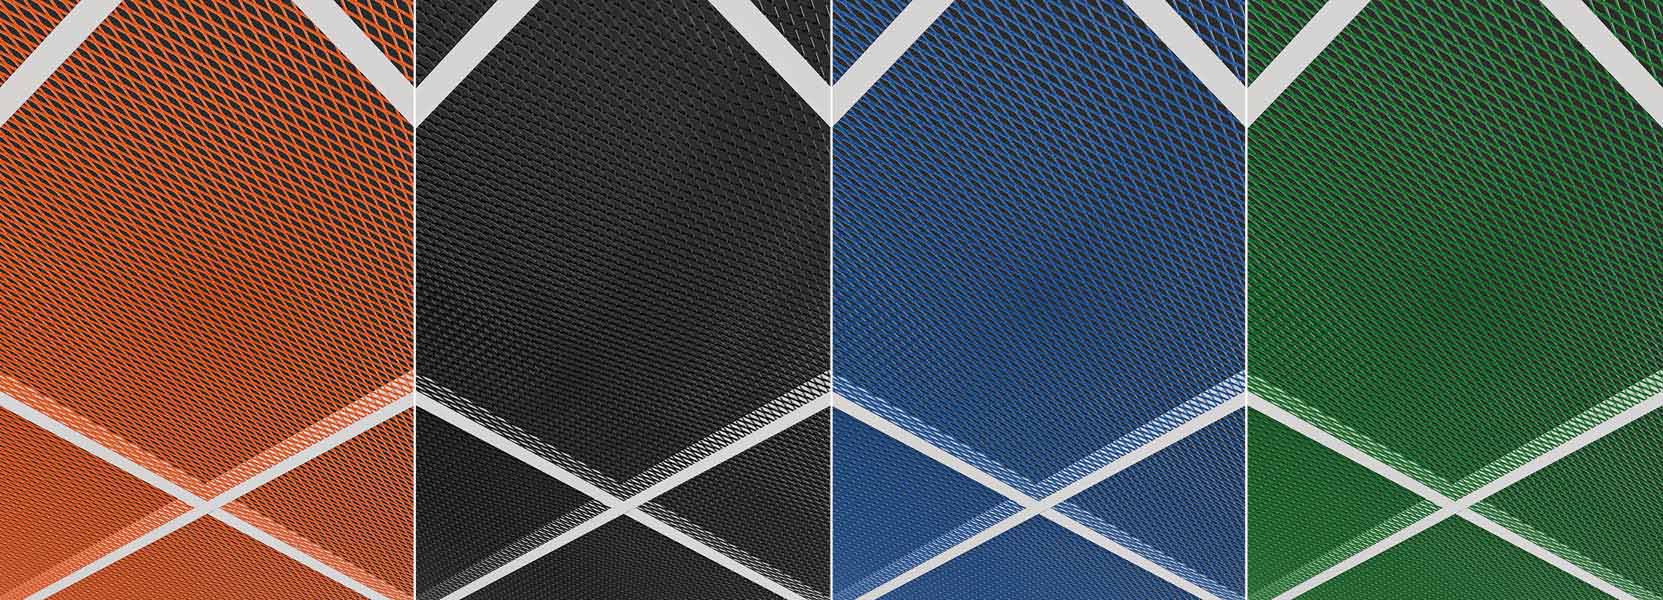 Zentia DecoMesh - tile colour options with white grid